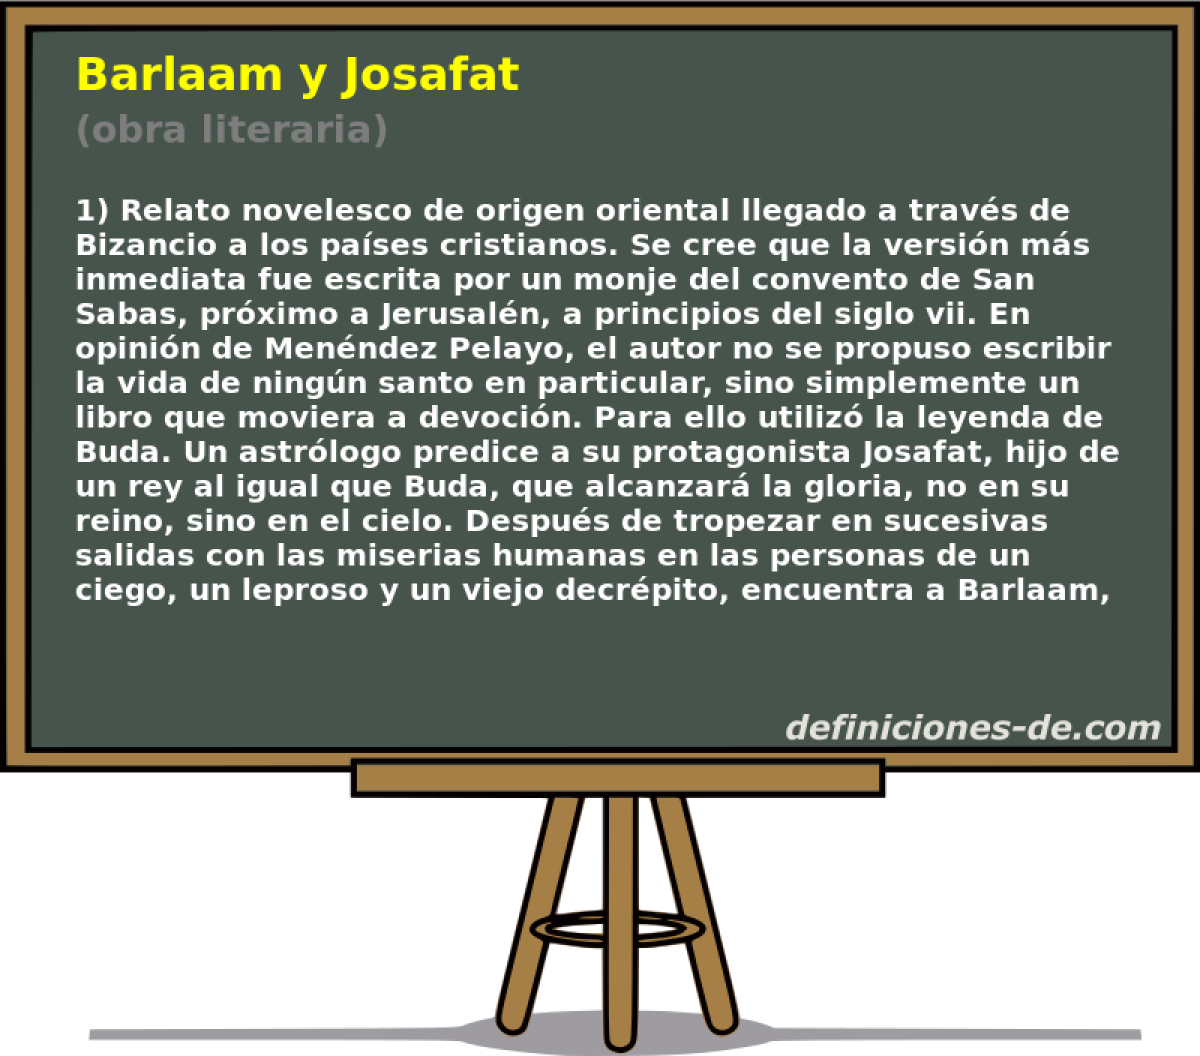 Barlaam y Josafat (obra literaria)